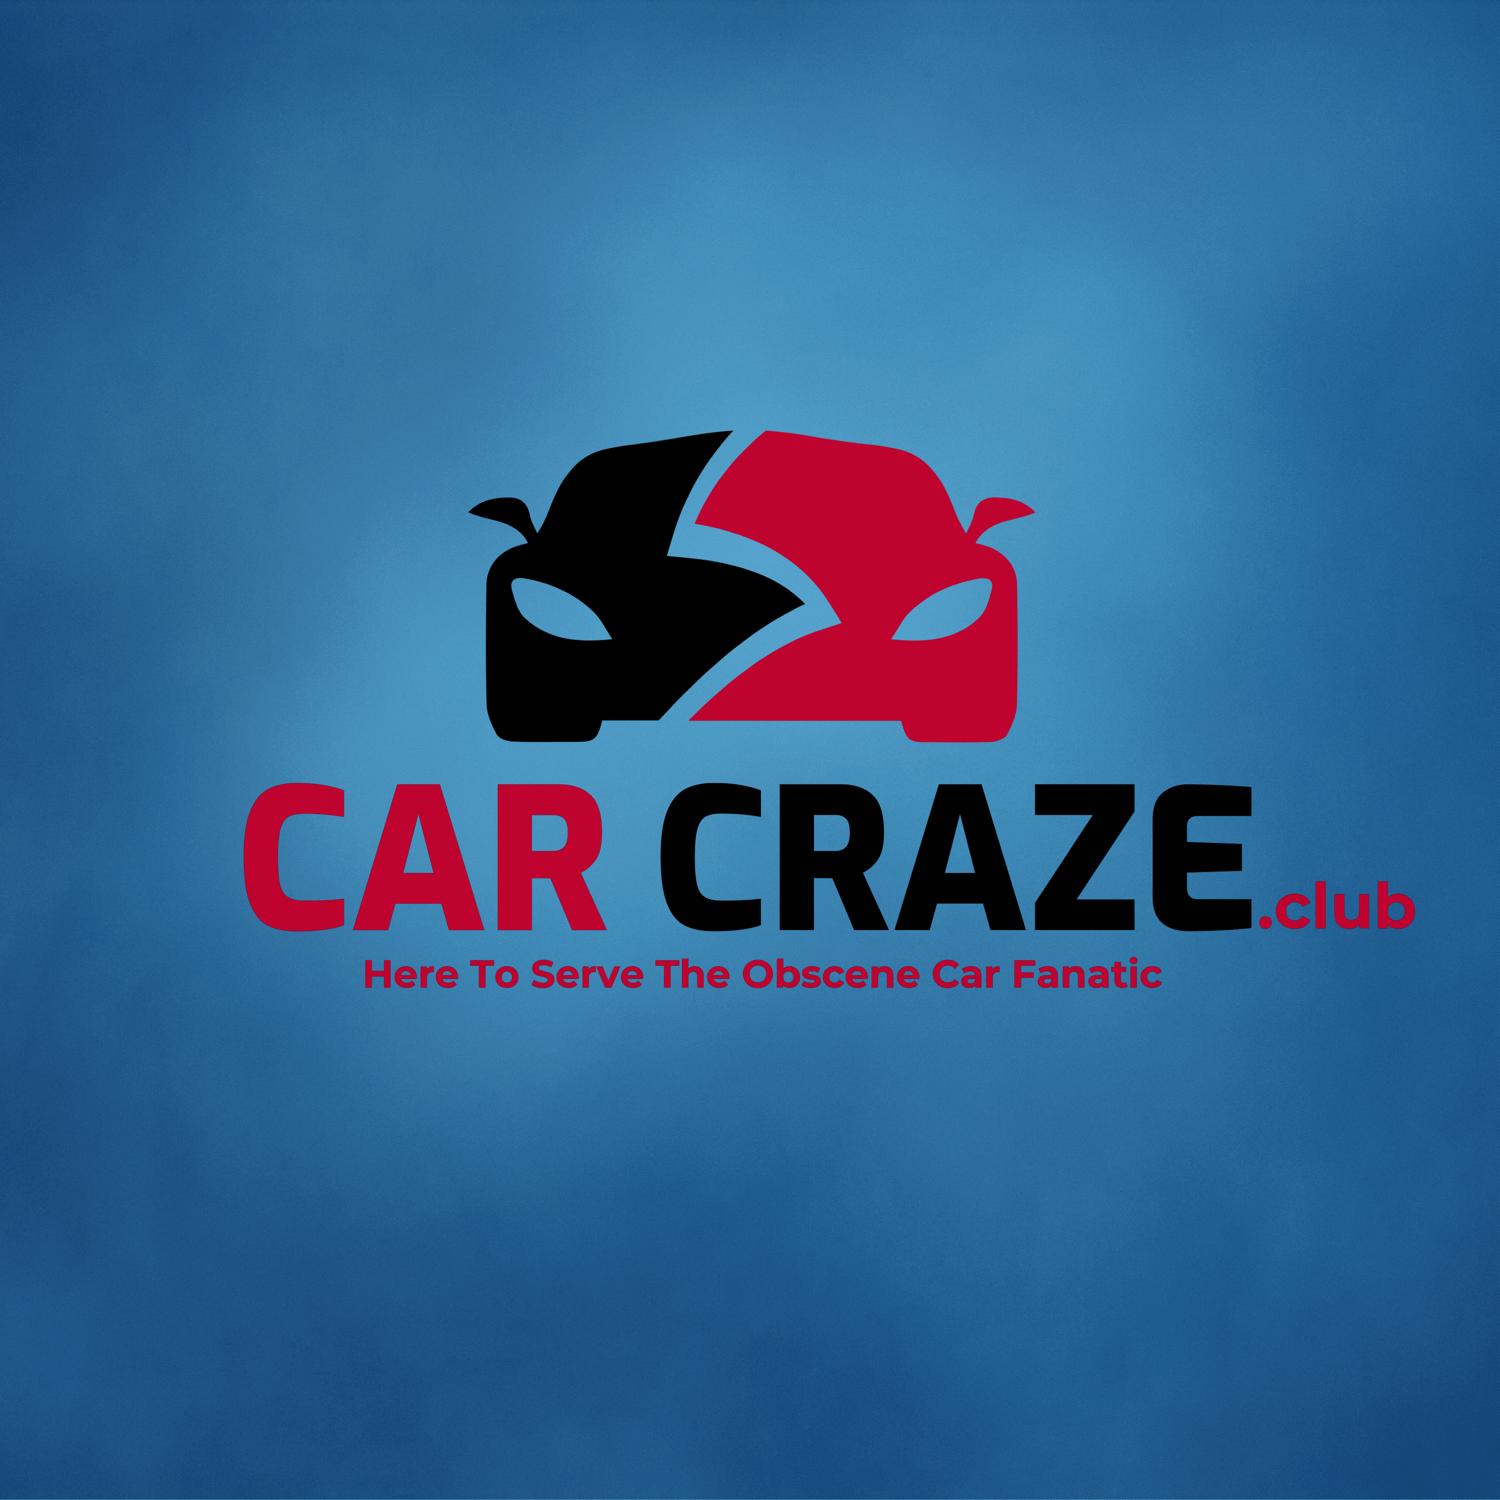 CarCraze Club